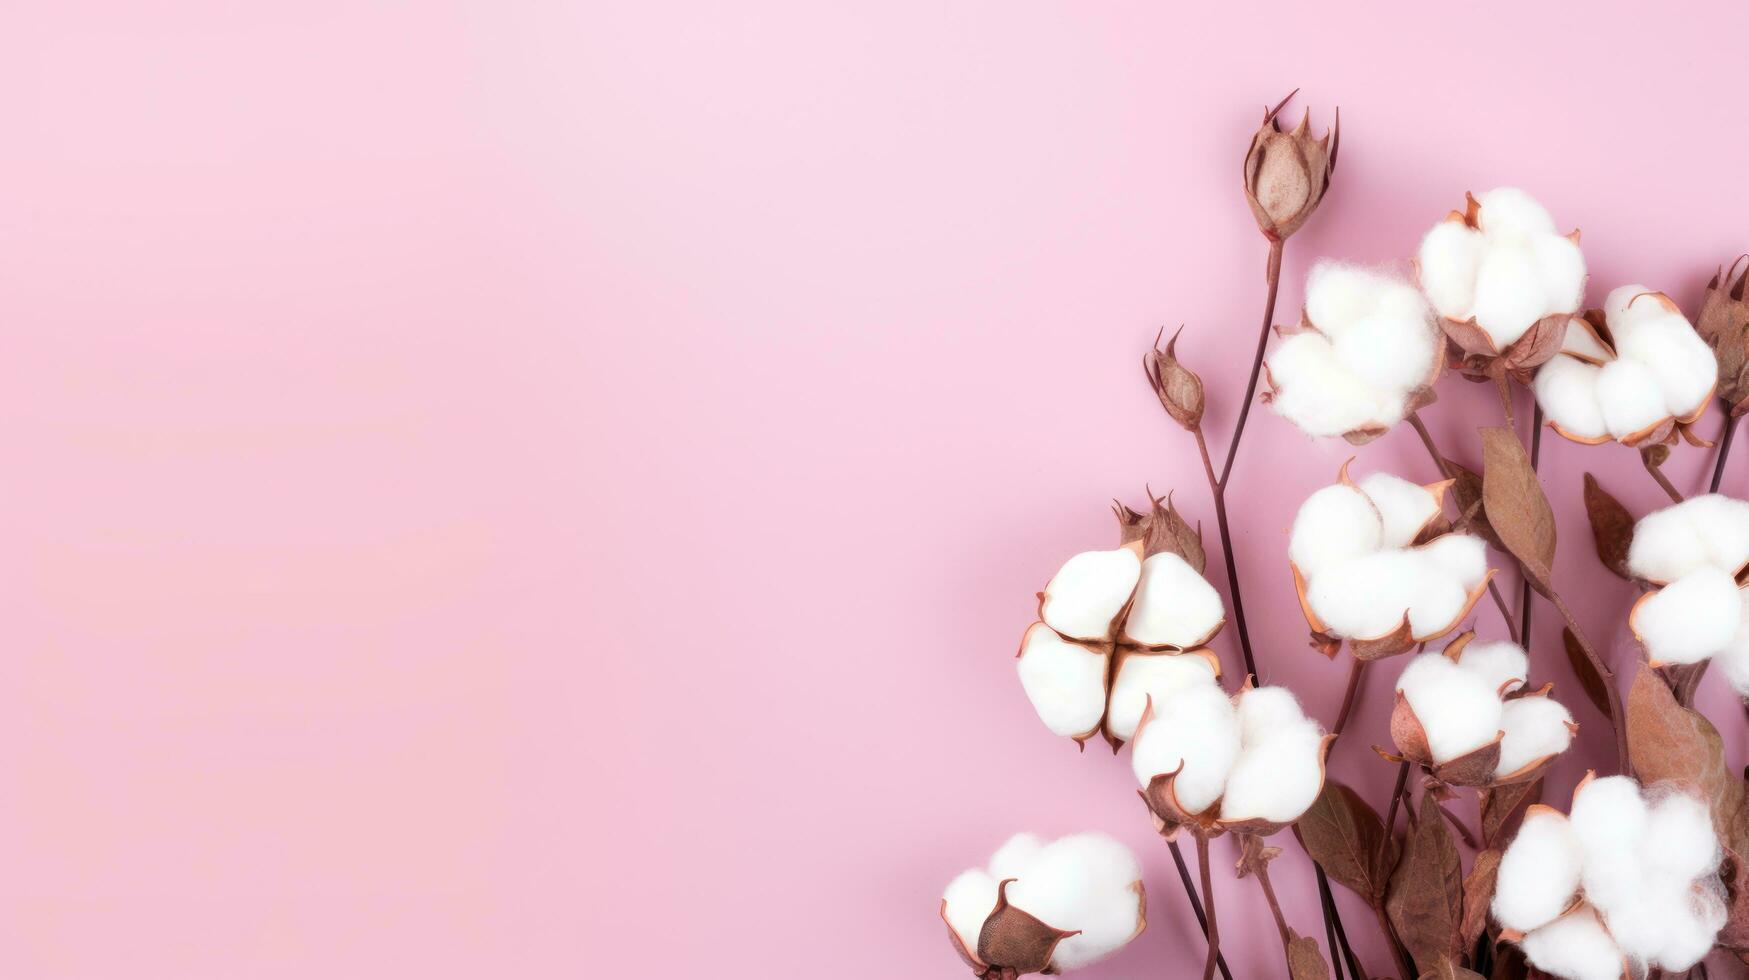 Pink minimalist background with cotton pads photo